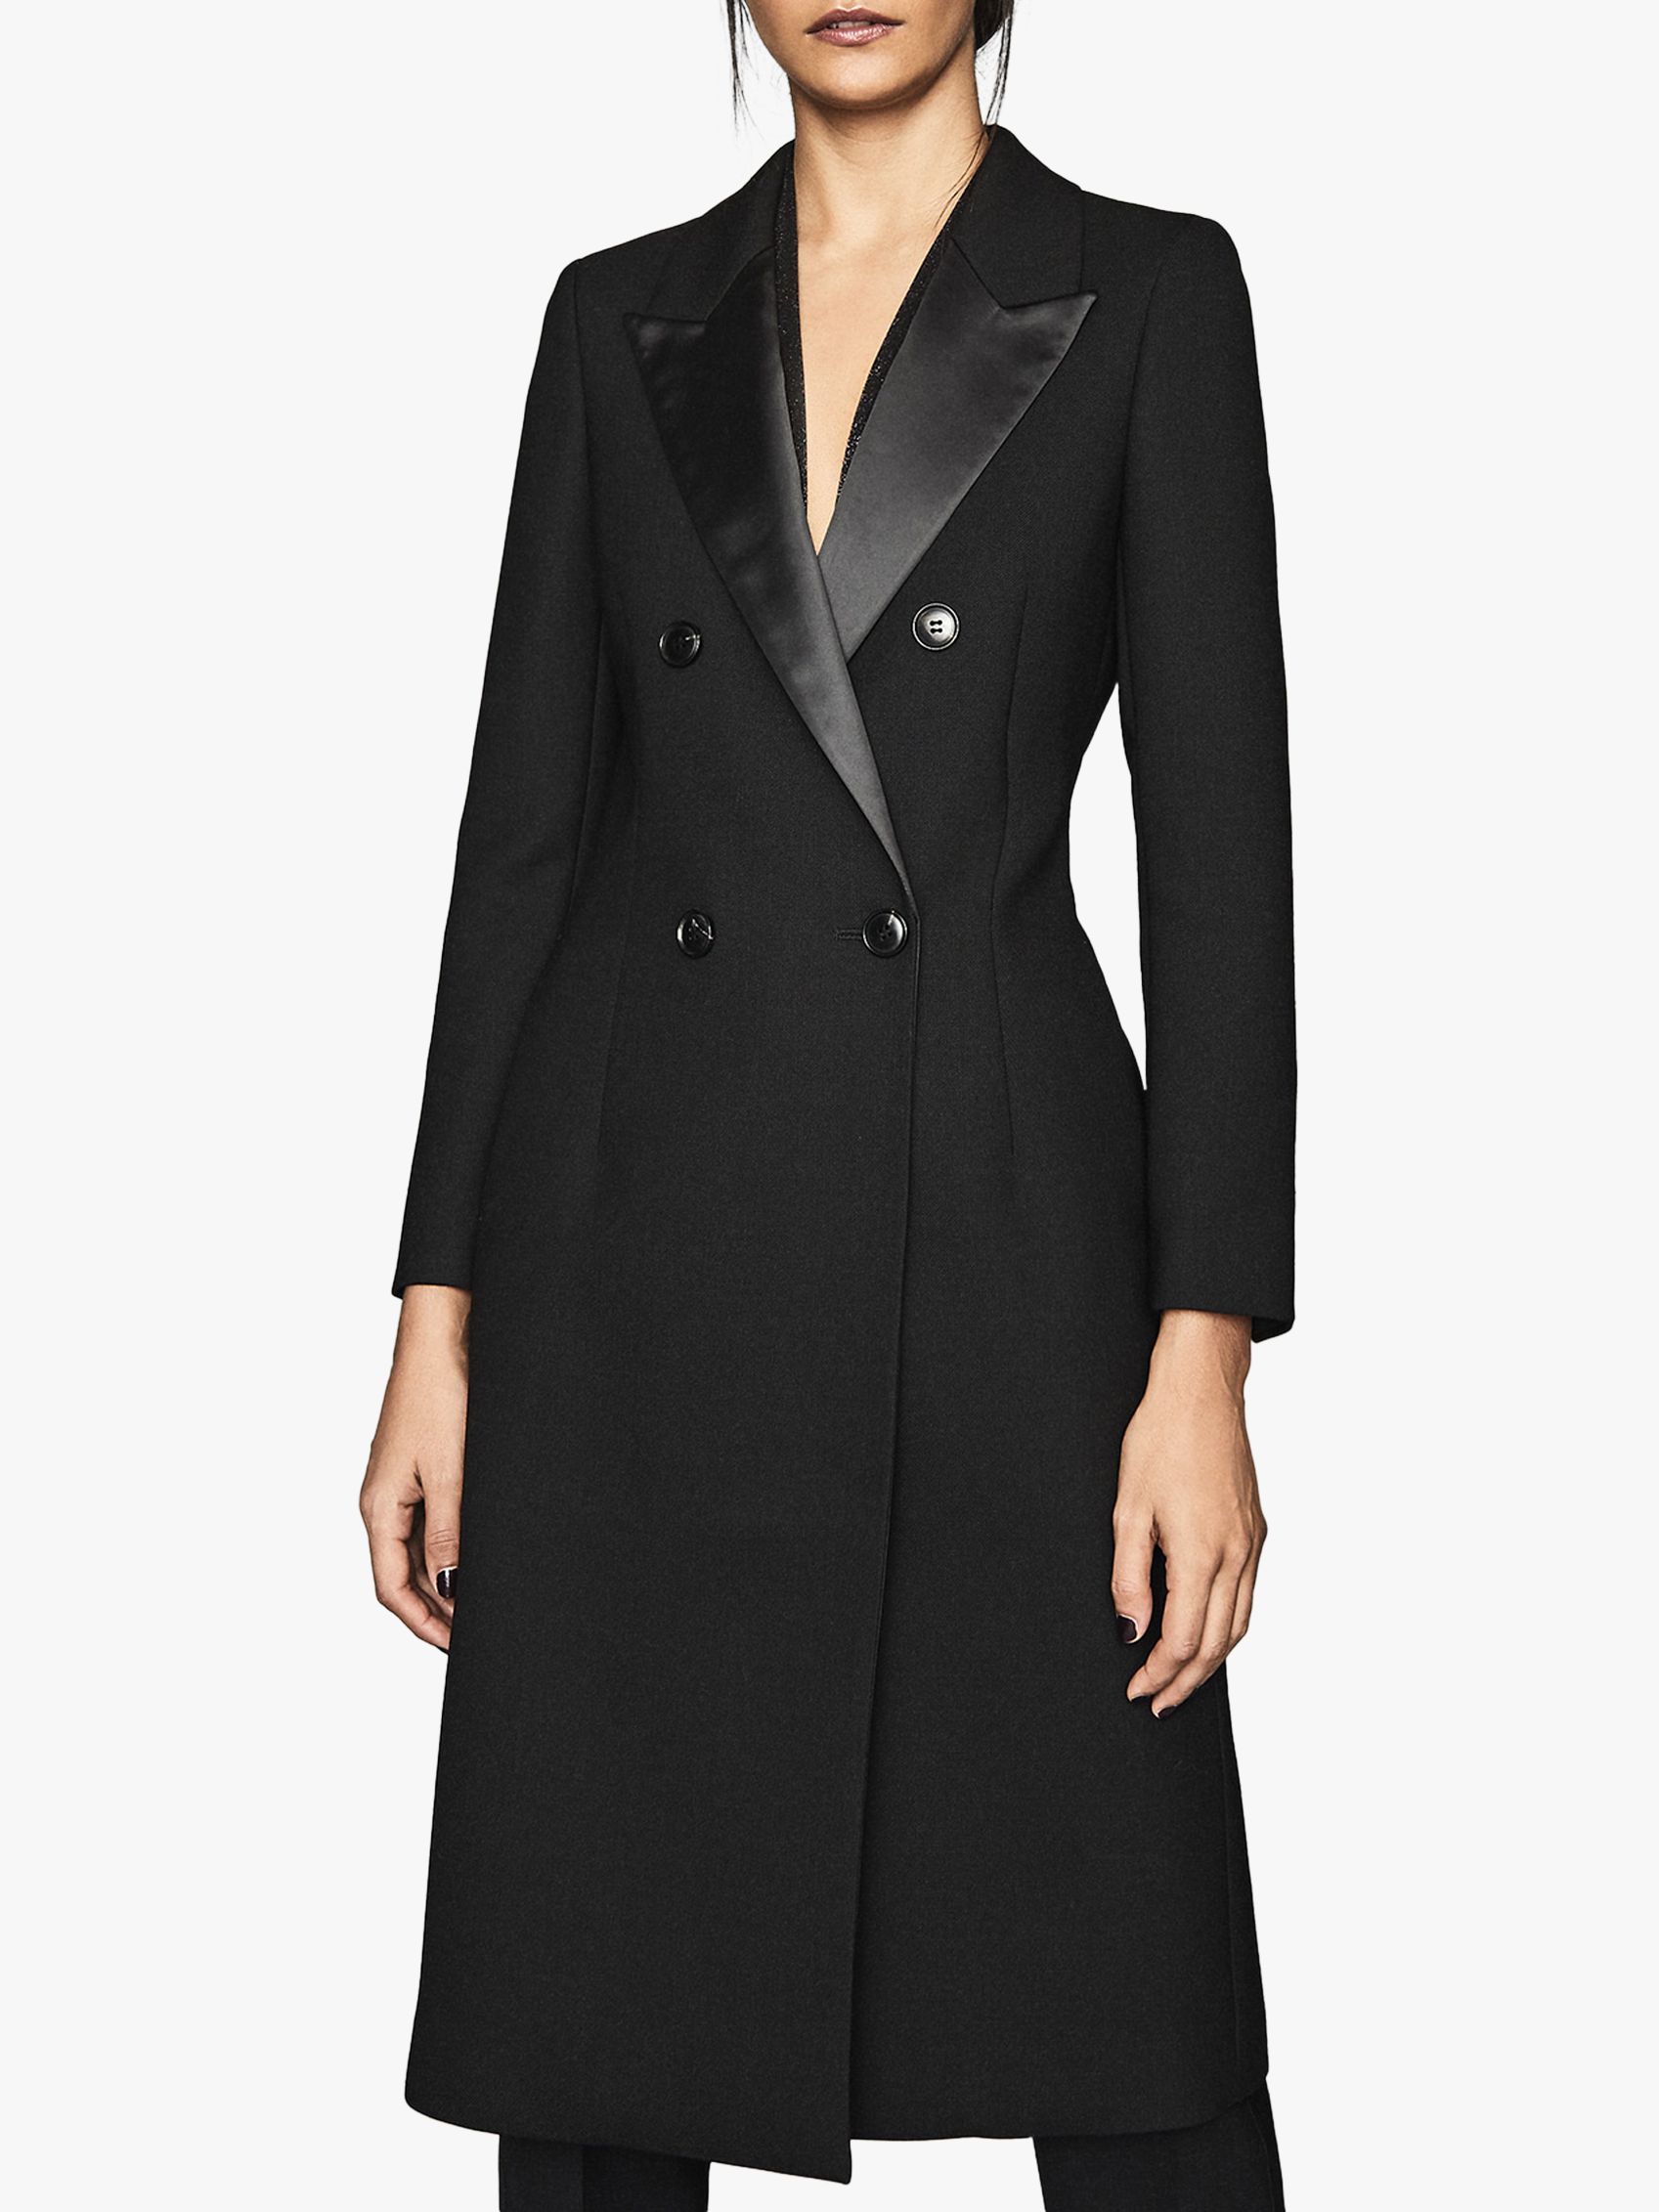 Reiss Hadi Wool Blend Tuxedo Style Long Coat, Black